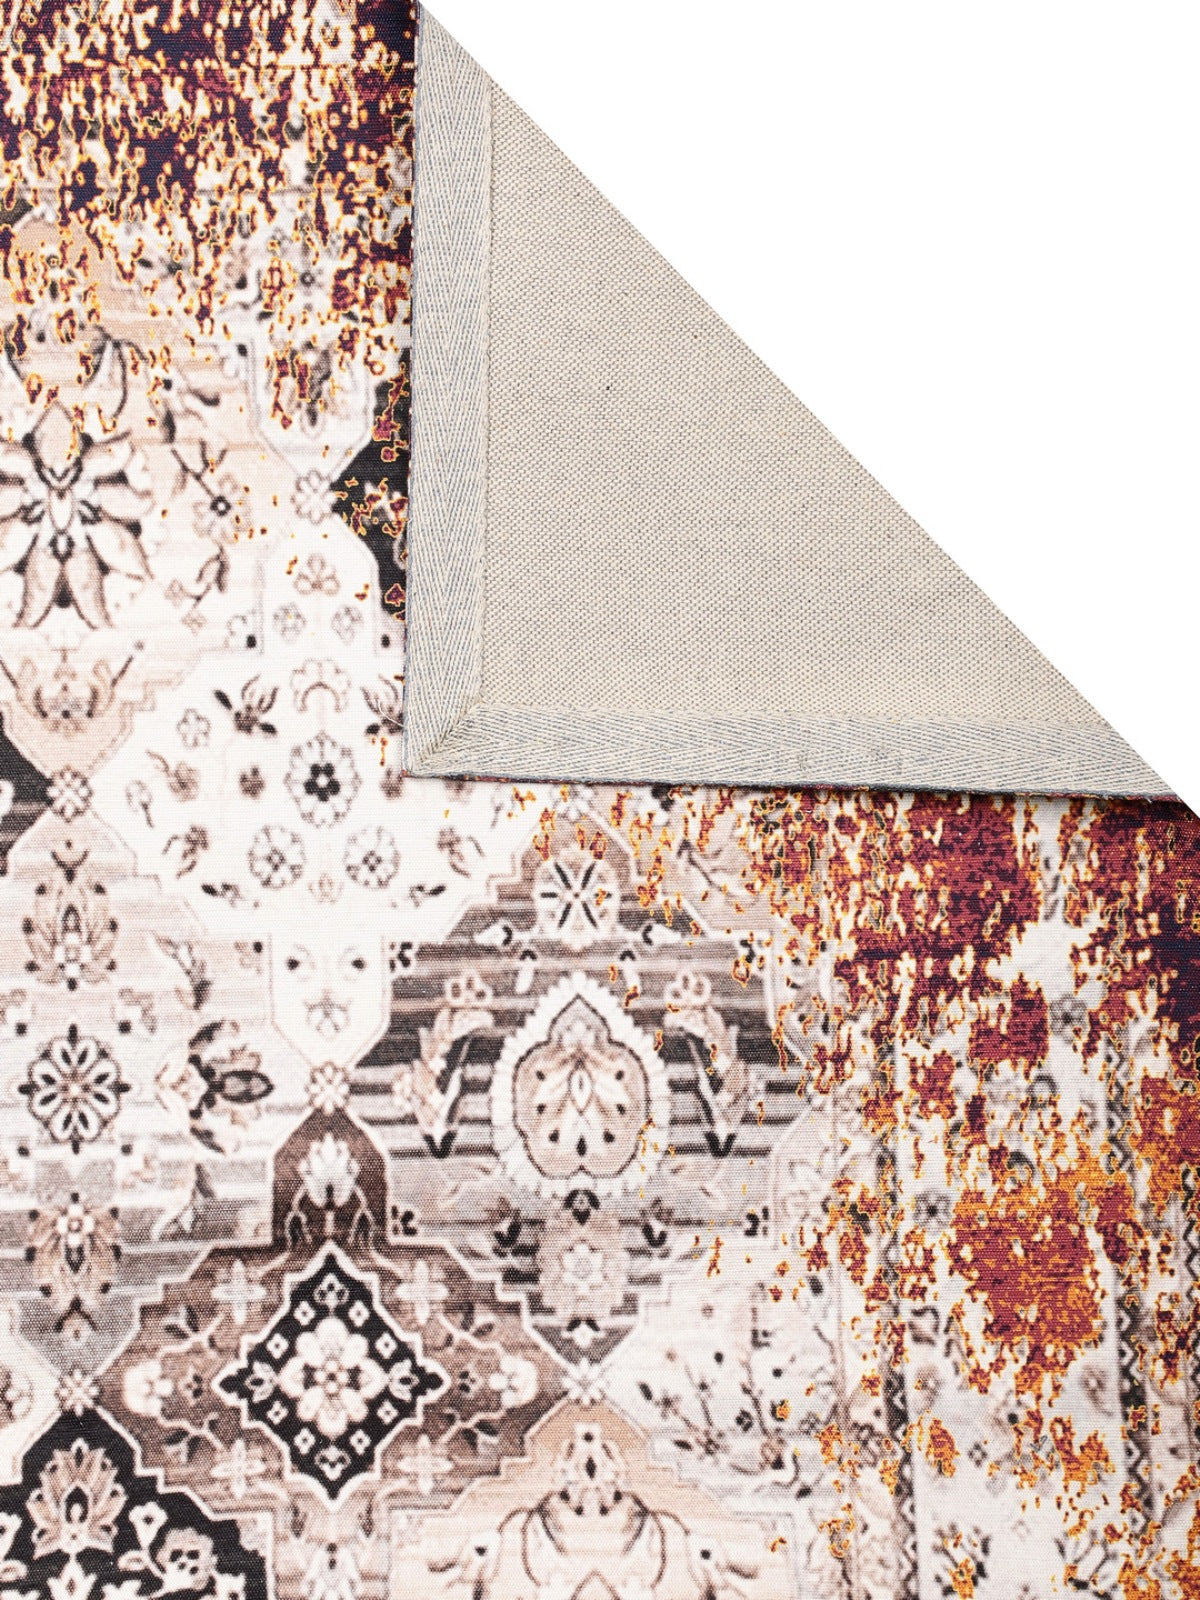 Multicolored 3 ft x 5 ft Ethnic Motifs Patterned Carpet